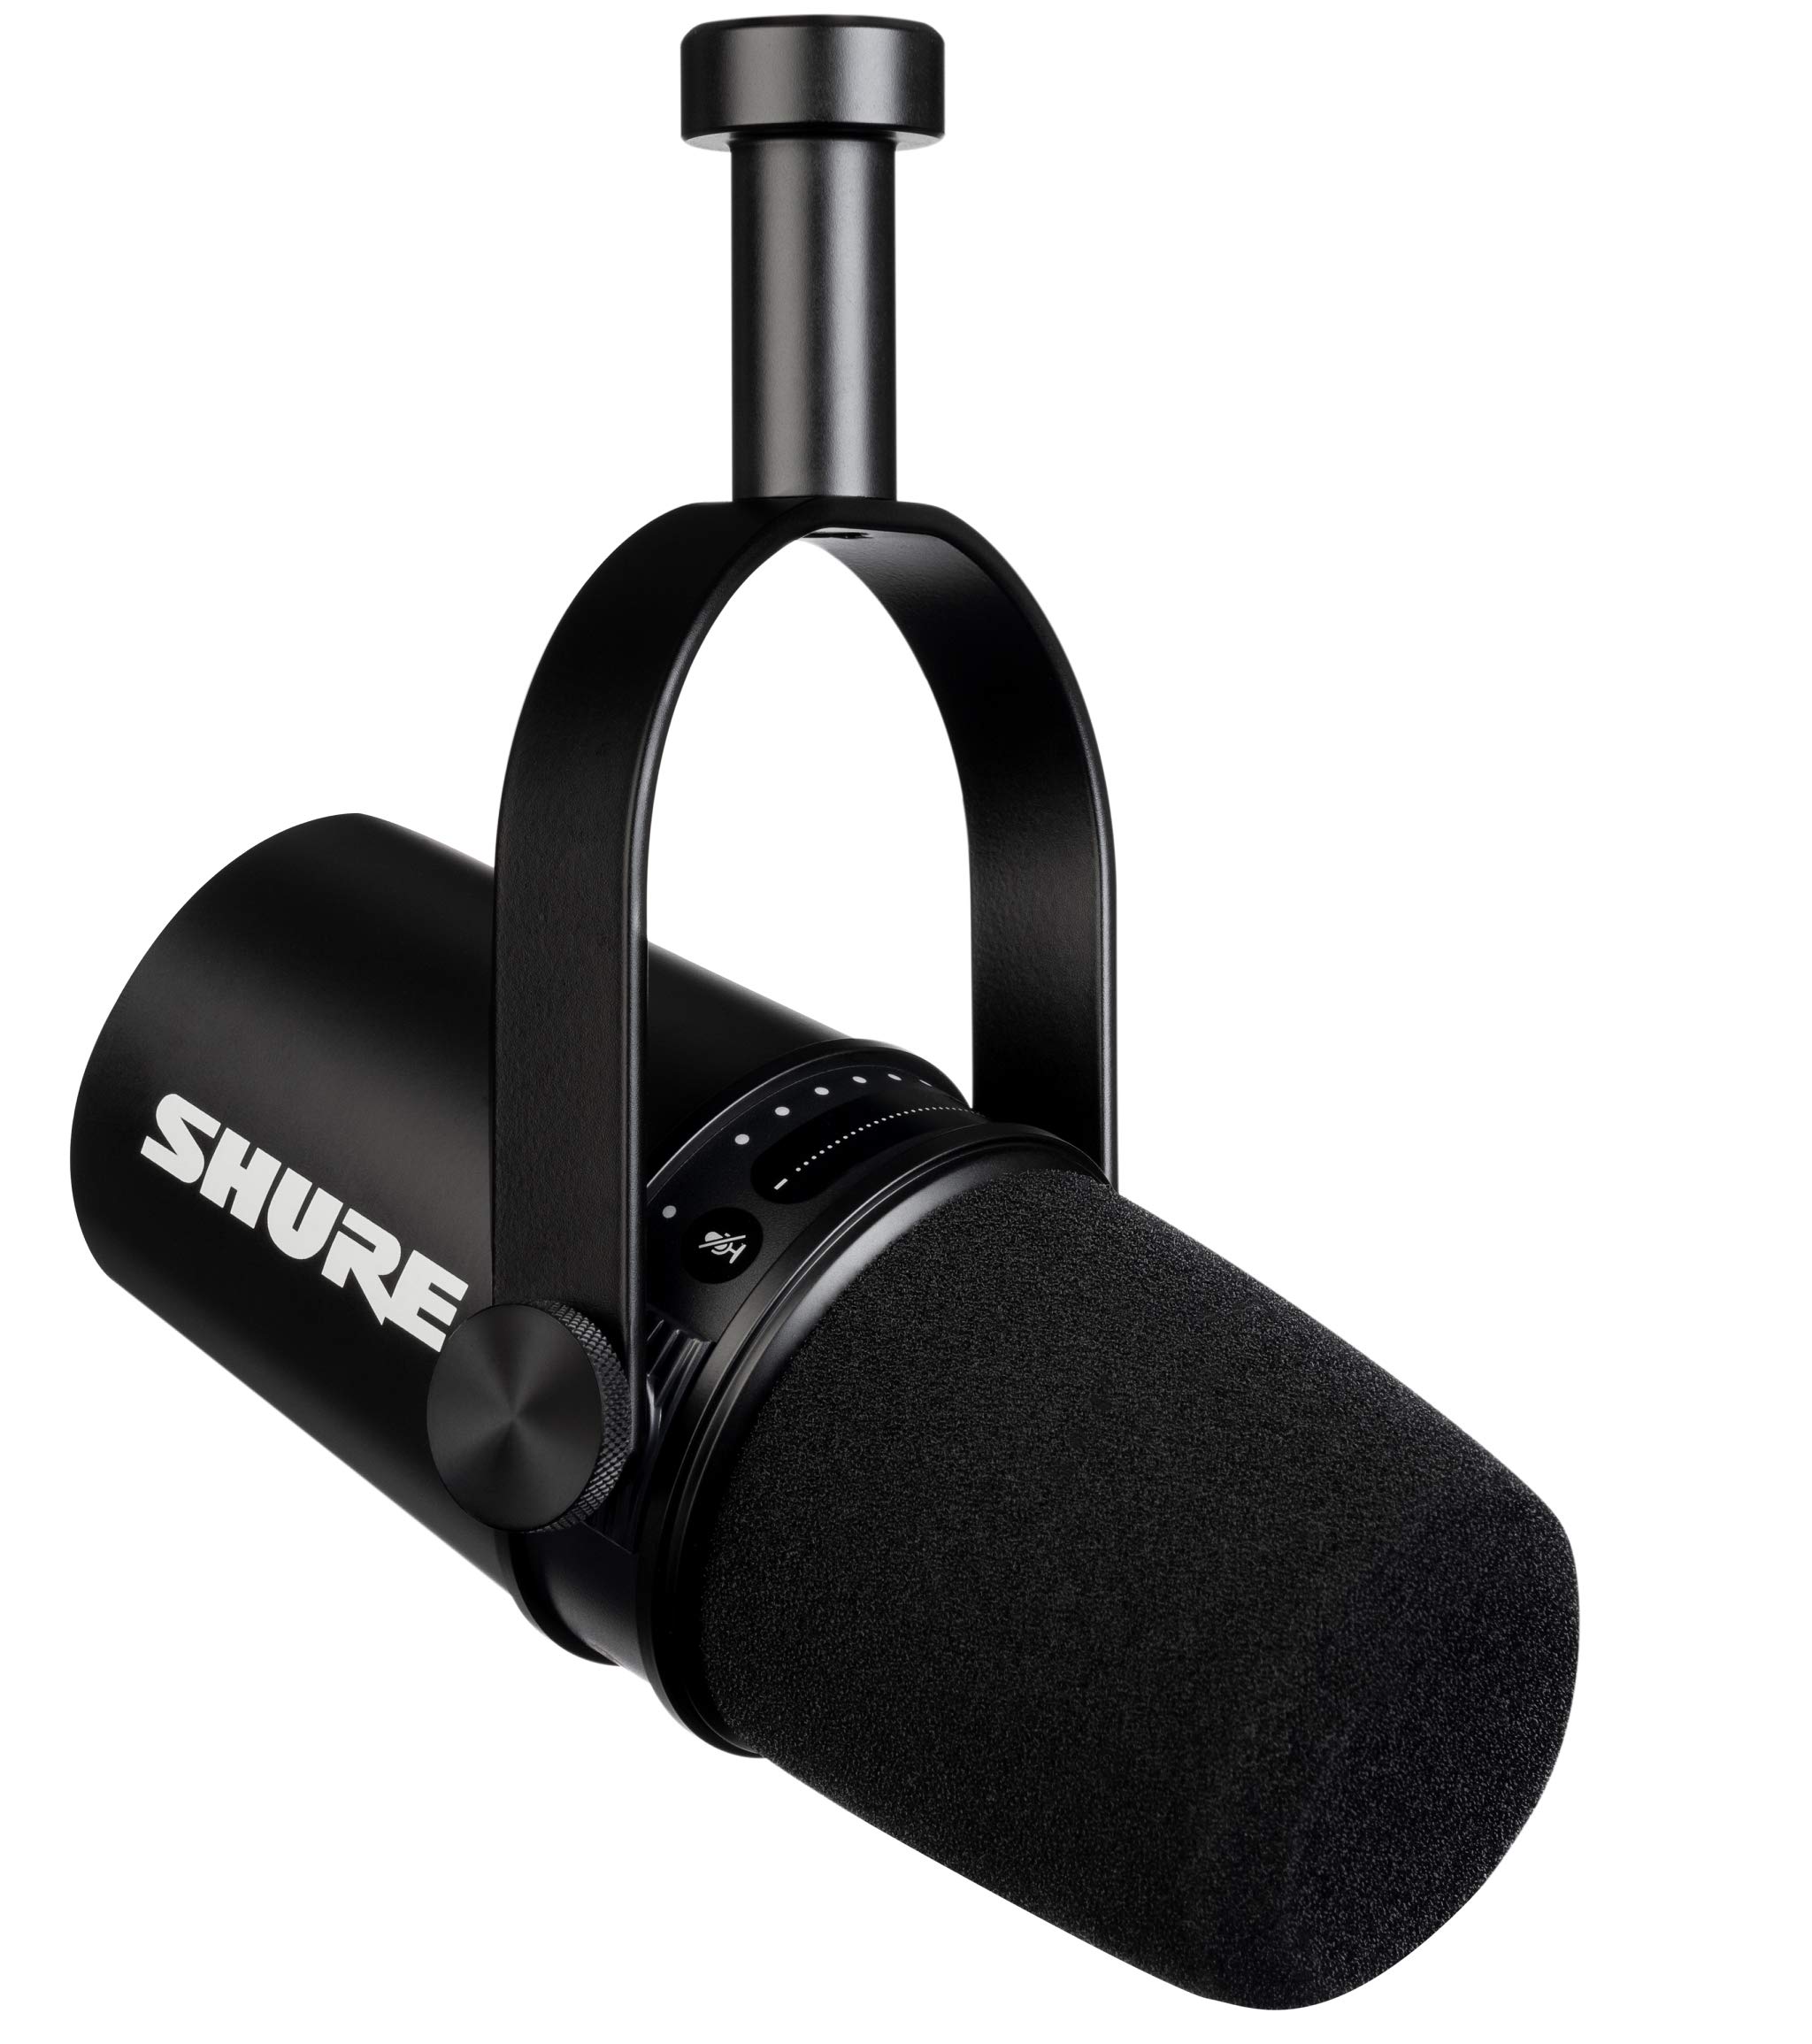 Shure MV7 USB 麦克风，适用于播客、录音、直播和游戏，内置耳机输出，全金属 USB/XLR 动态麦...